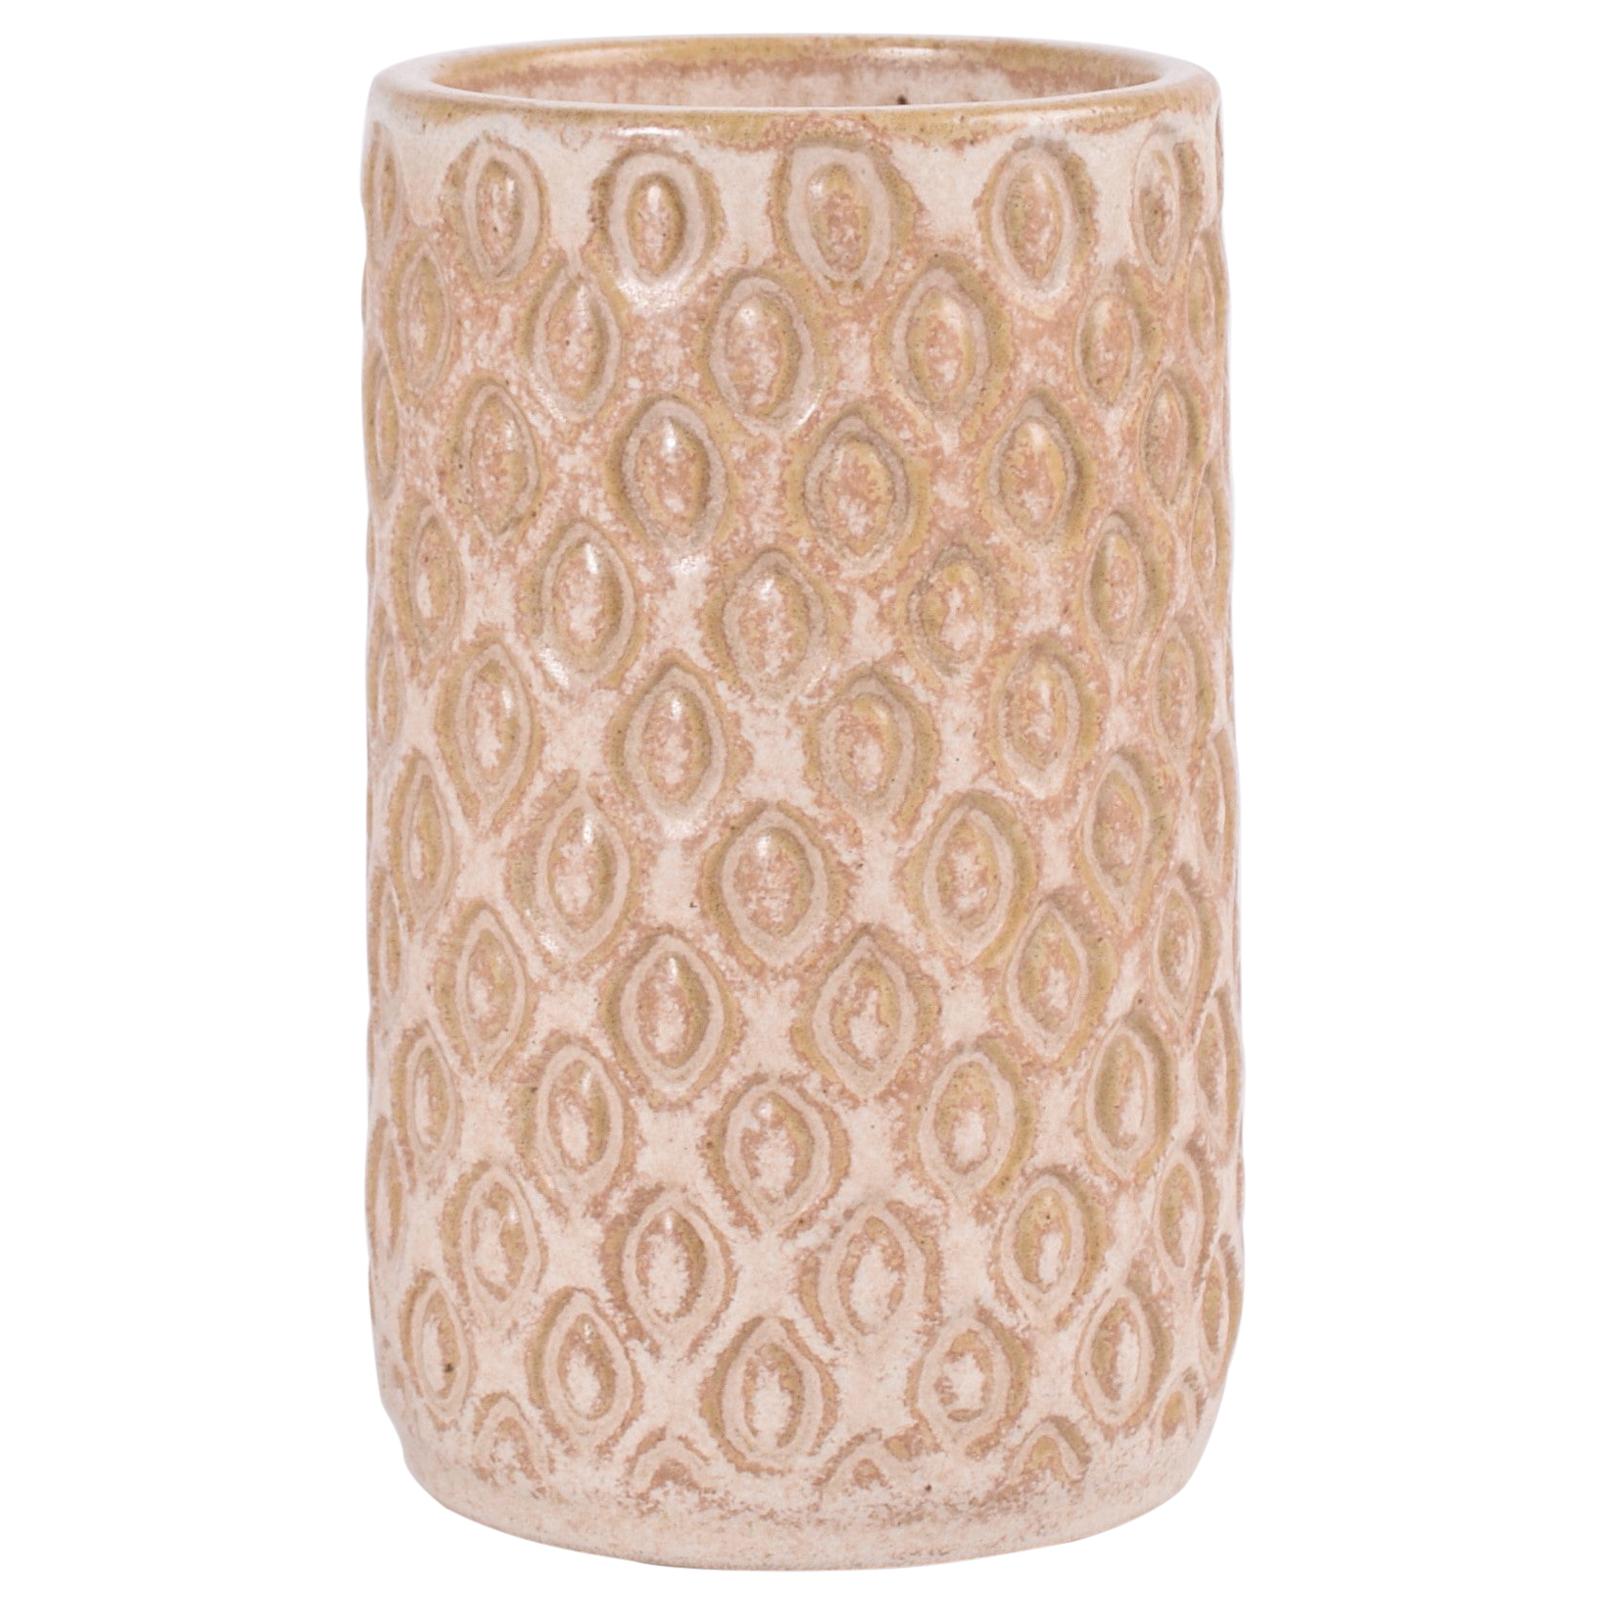 Danish Midcentury Beige Ceramic Vase Budding Style by Eva Sjögren for L. Hjorth For Sale